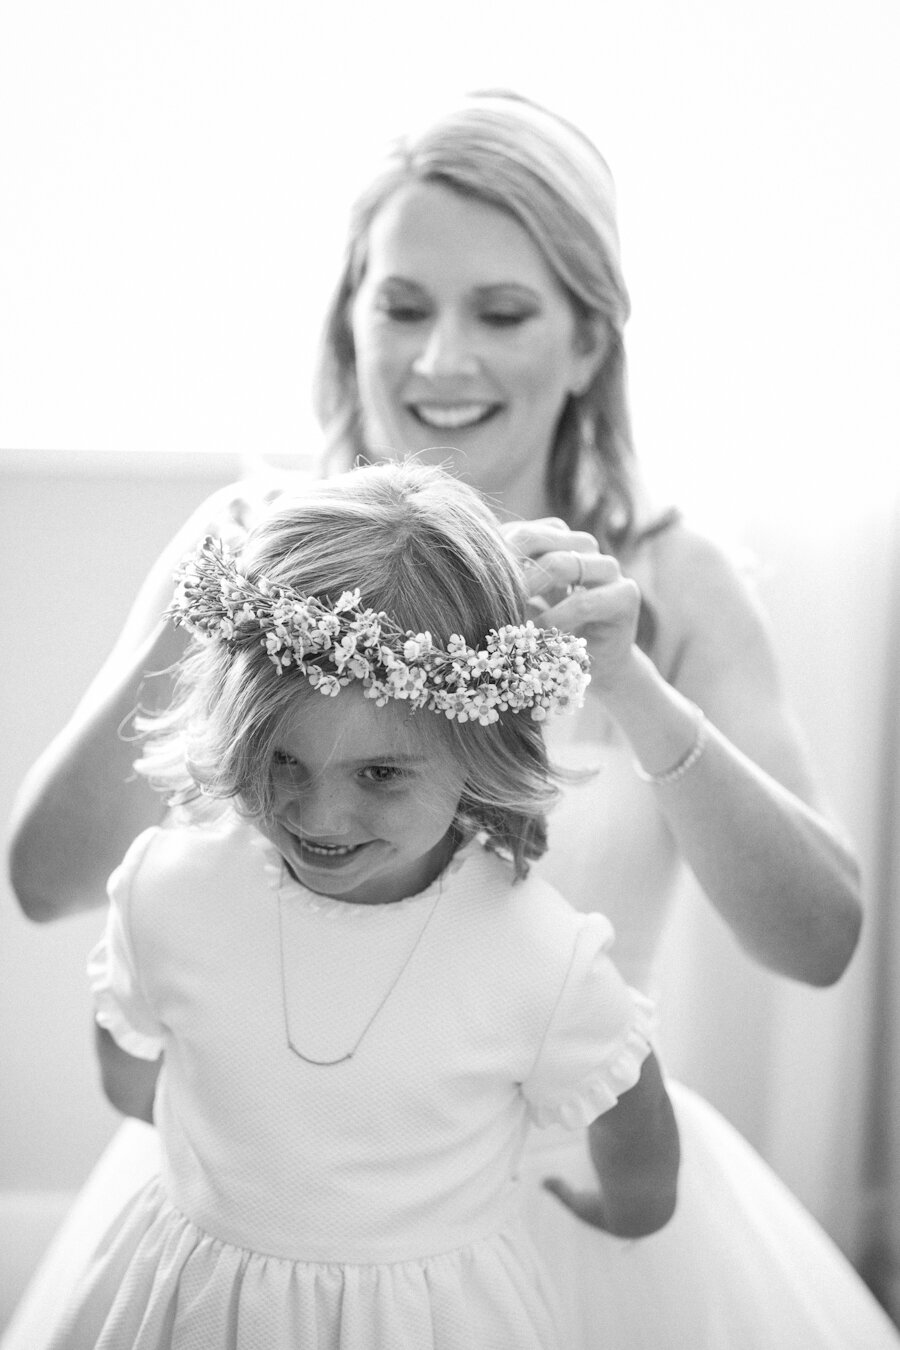 Valley Rock Inn wedding flower girl with flower crown